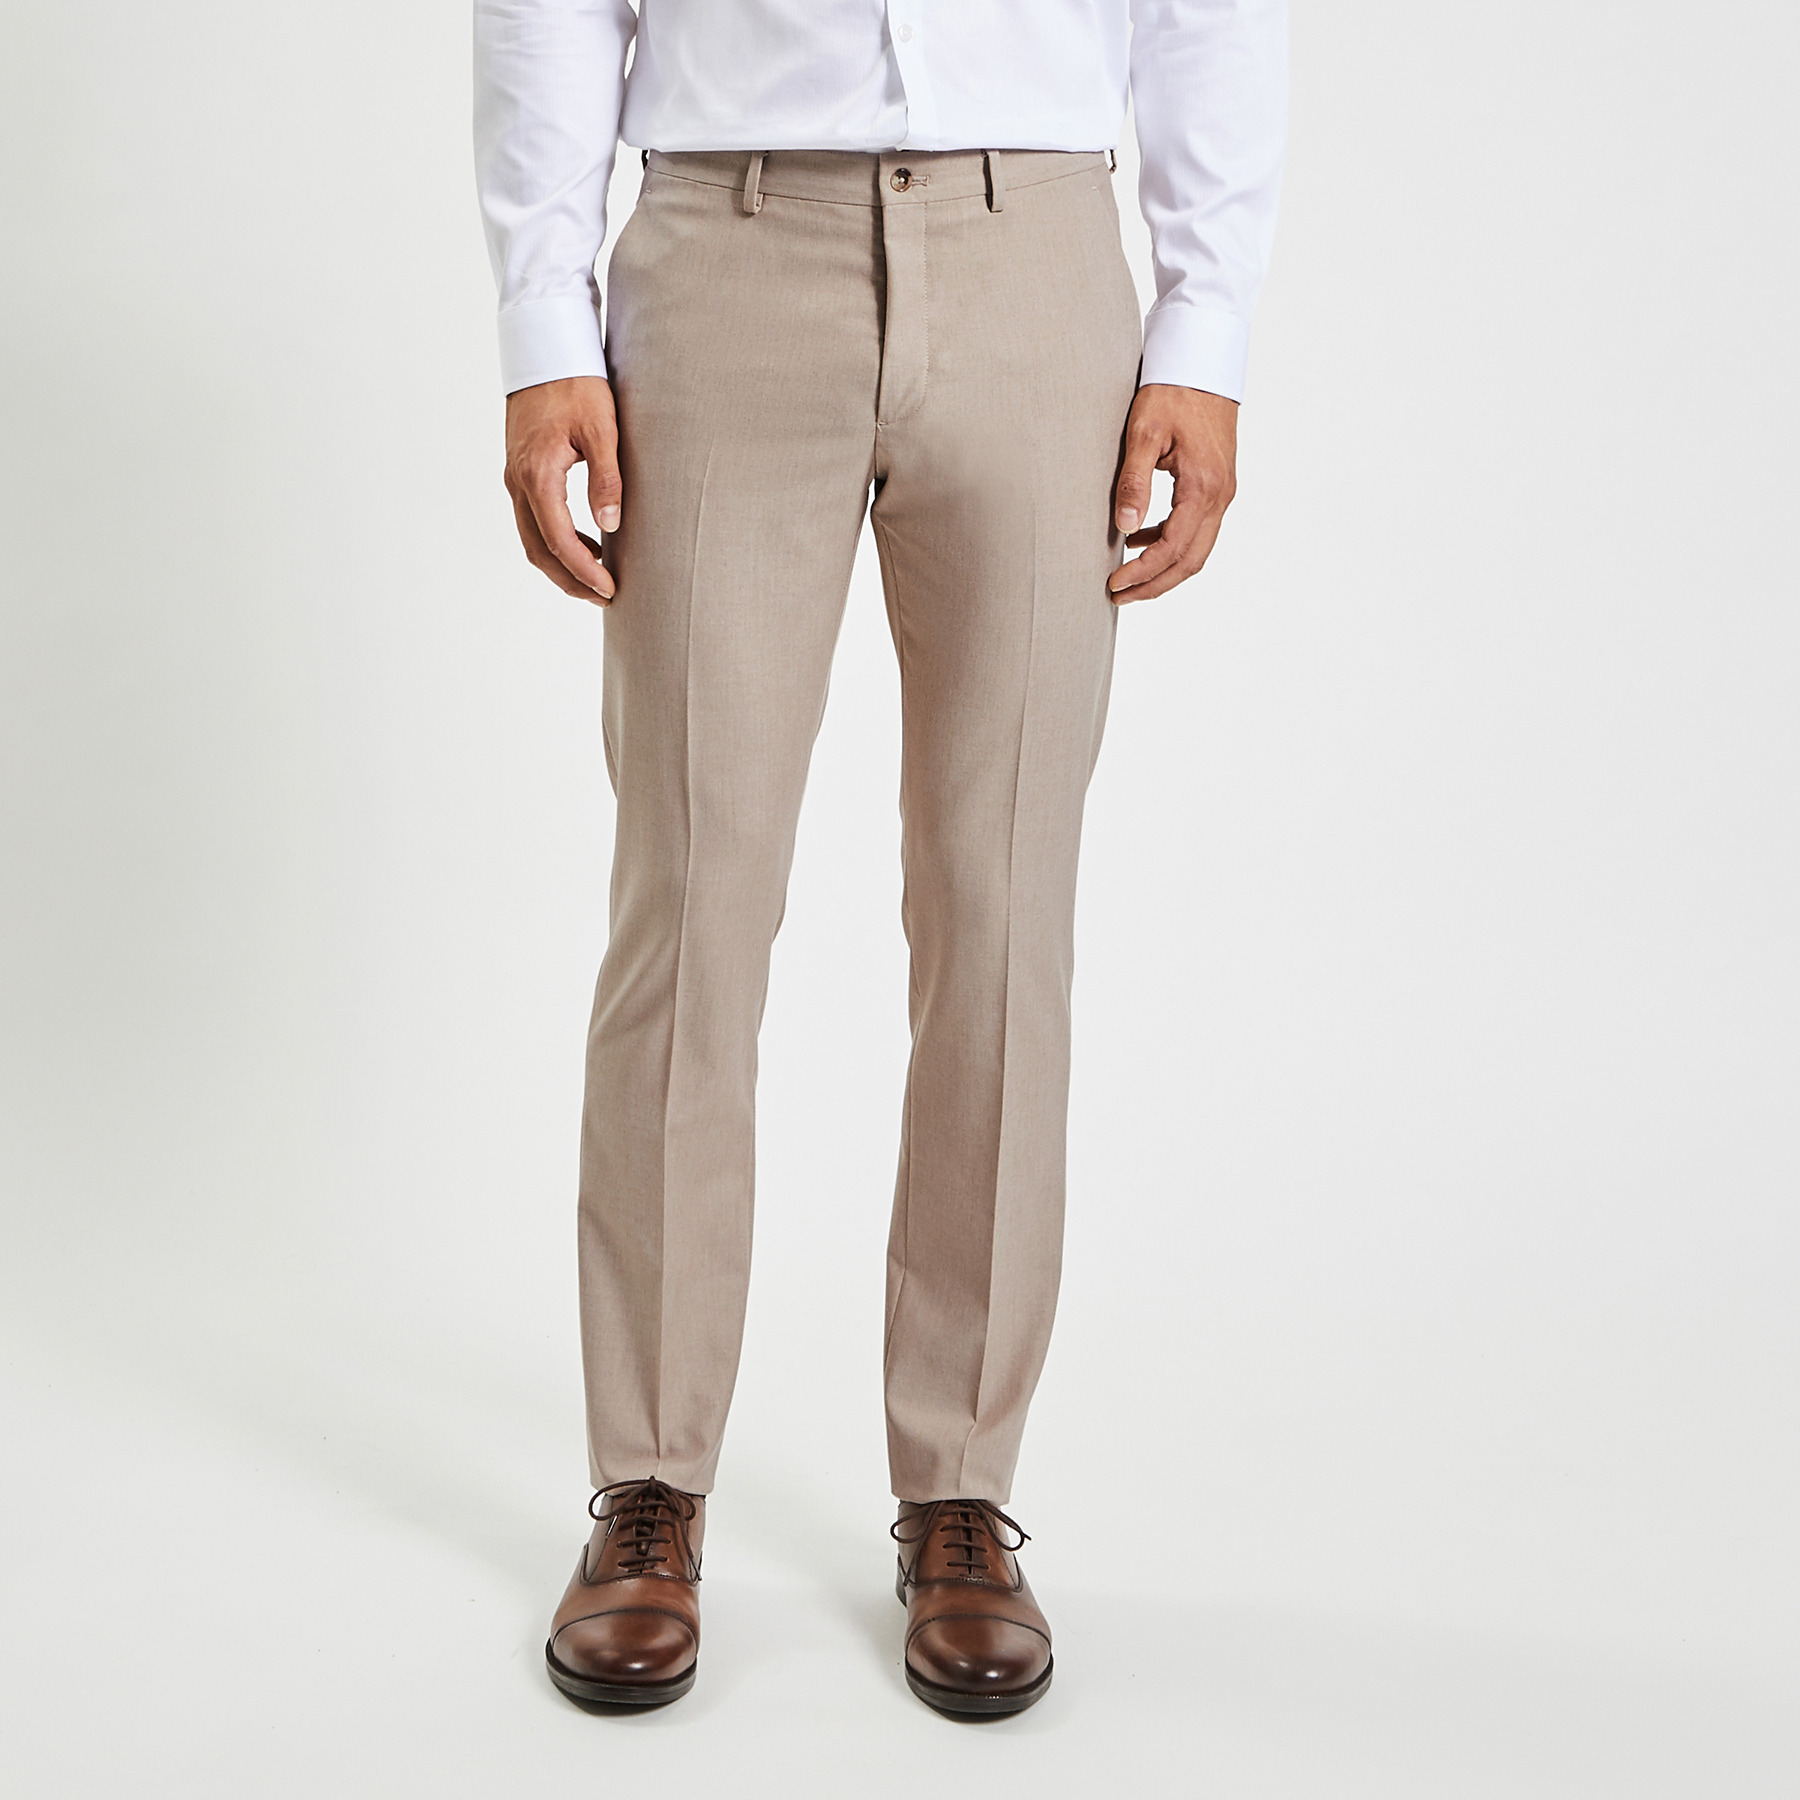 Pantalon de costume slim bi-ton Beige 36 71% Polyester, 27% Viscose, 2% Elasthanne Homme